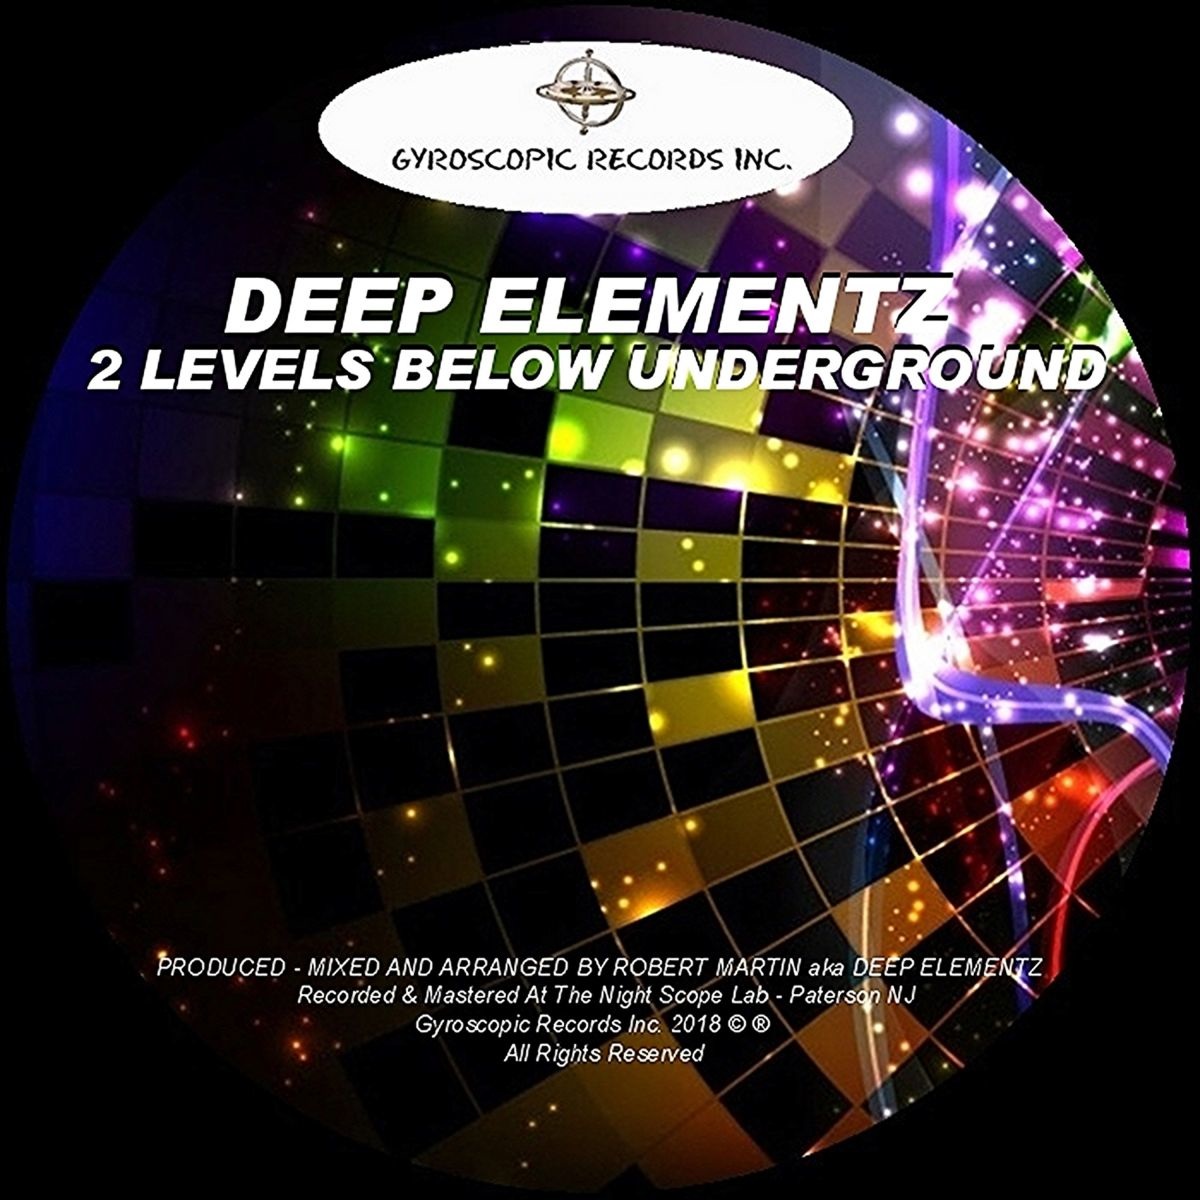 Deep Elementz - 2 Levels Below Underground / Gyroscopic Records Inc.